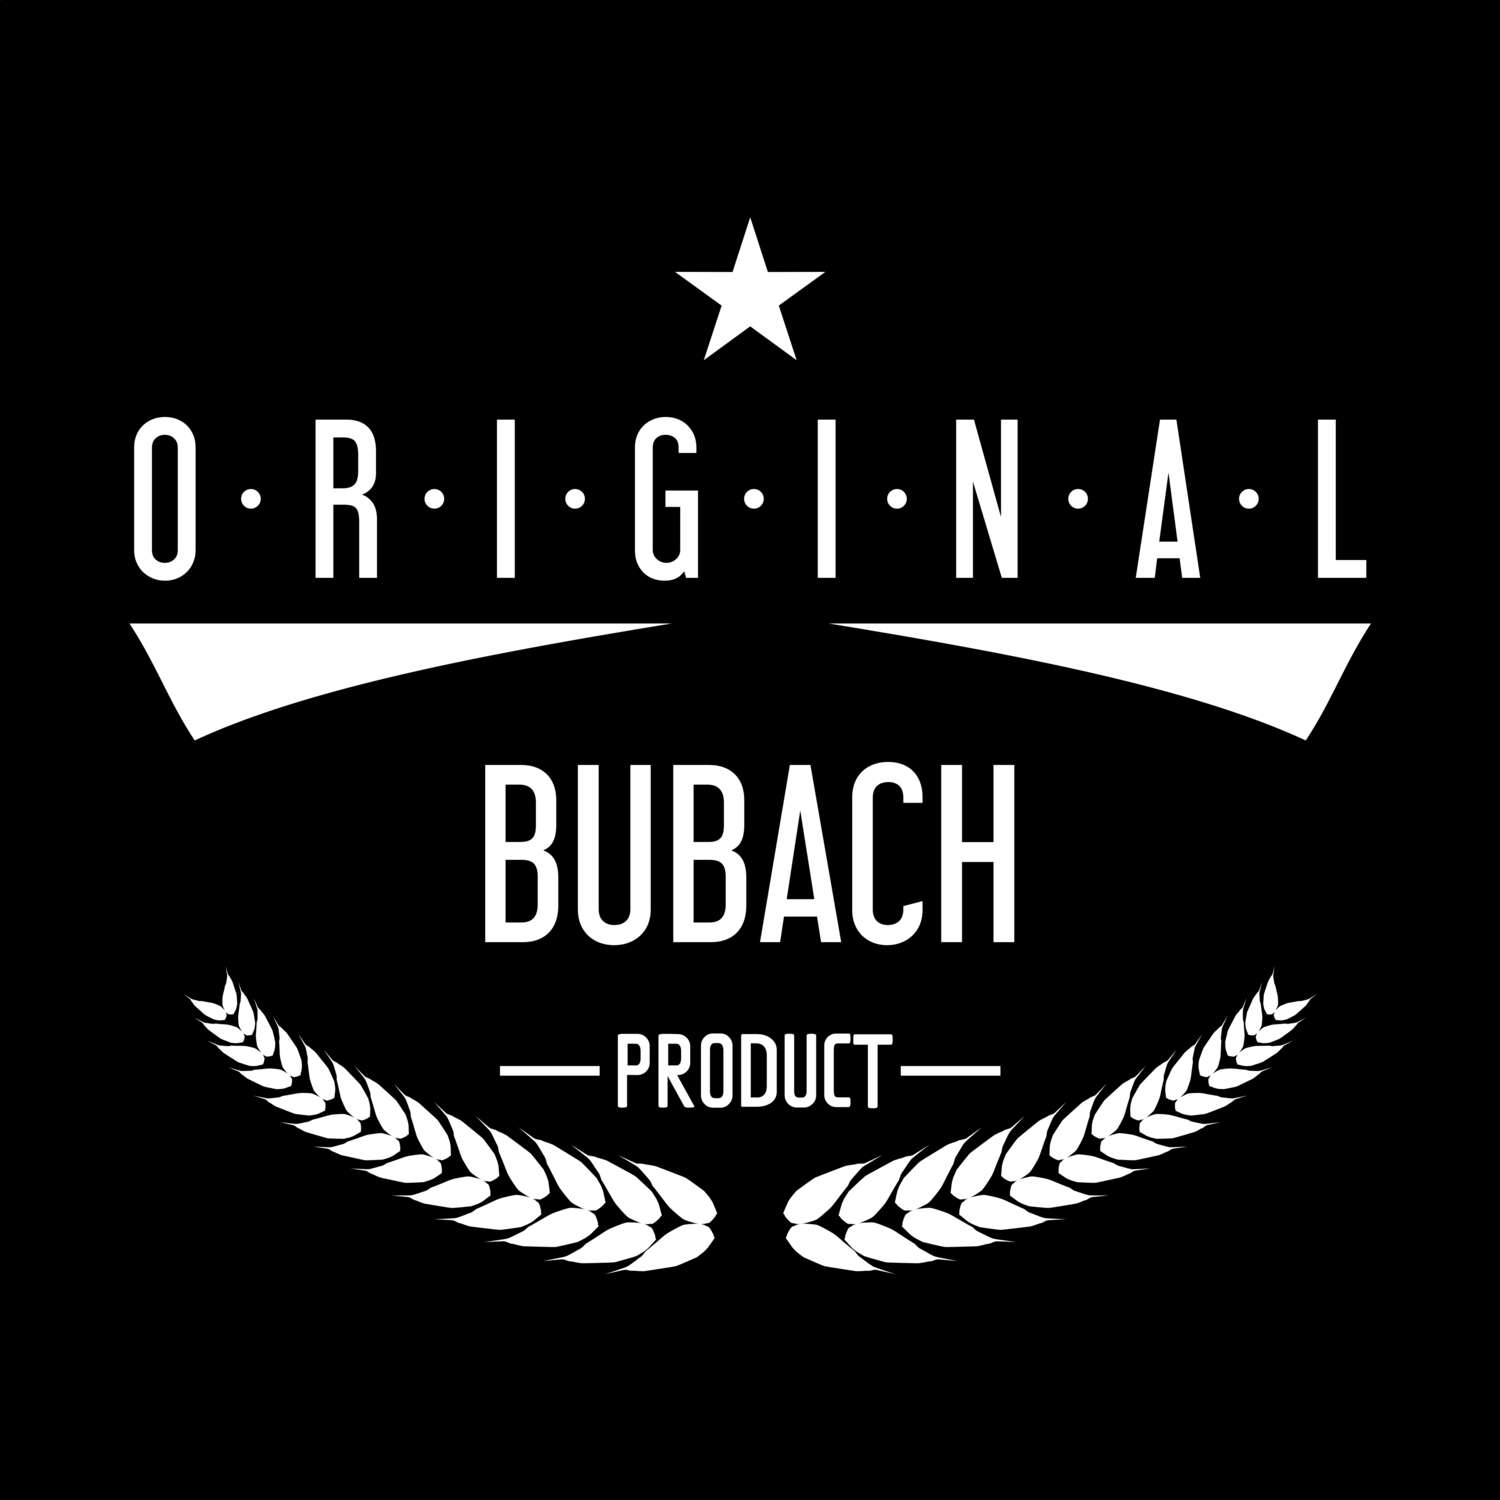 Bubach T-Shirt »Original Product«